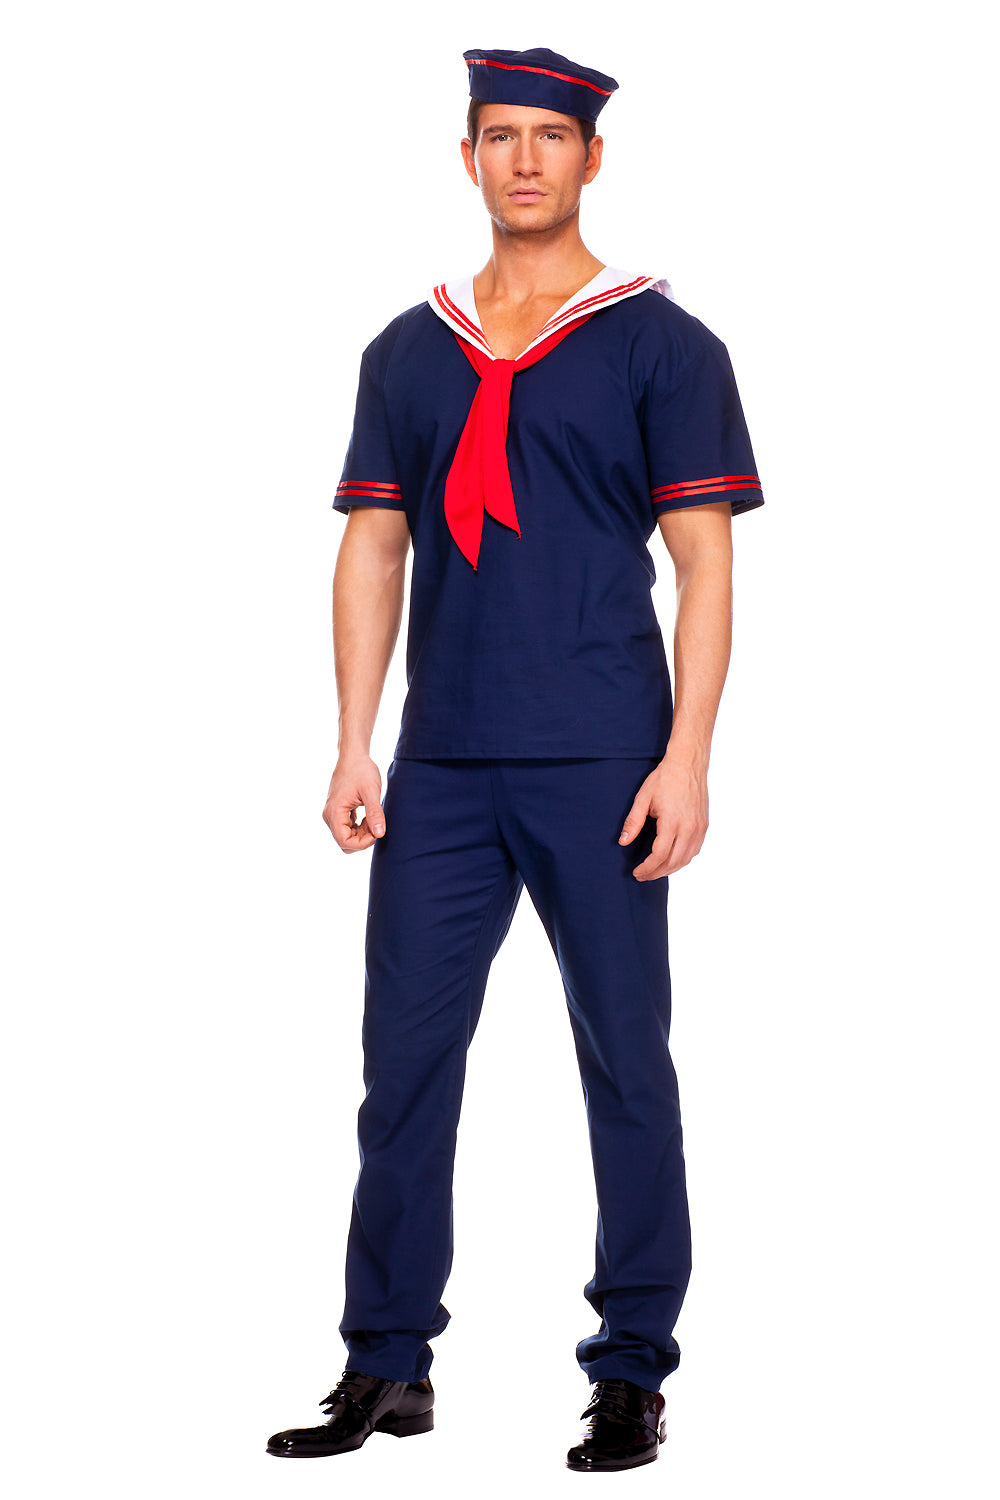 Ahoy Matey Navy Blue Sailor Men's Costume